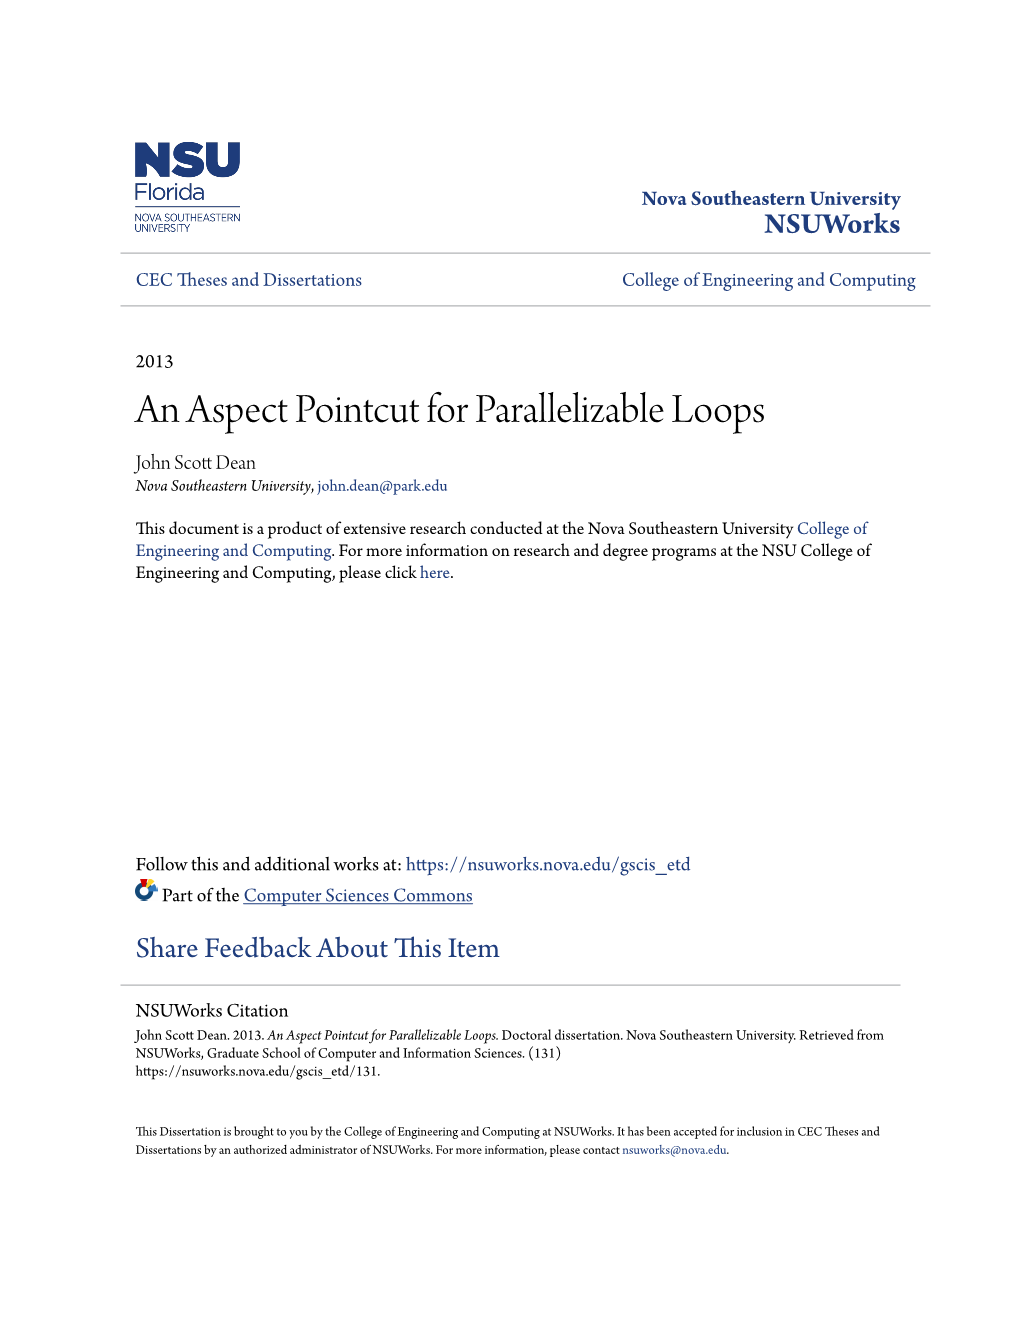 An Aspect Pointcut for Parallelizable Loops John Scott Ed an Nova Southeastern University, John.Dean@Park.Edu